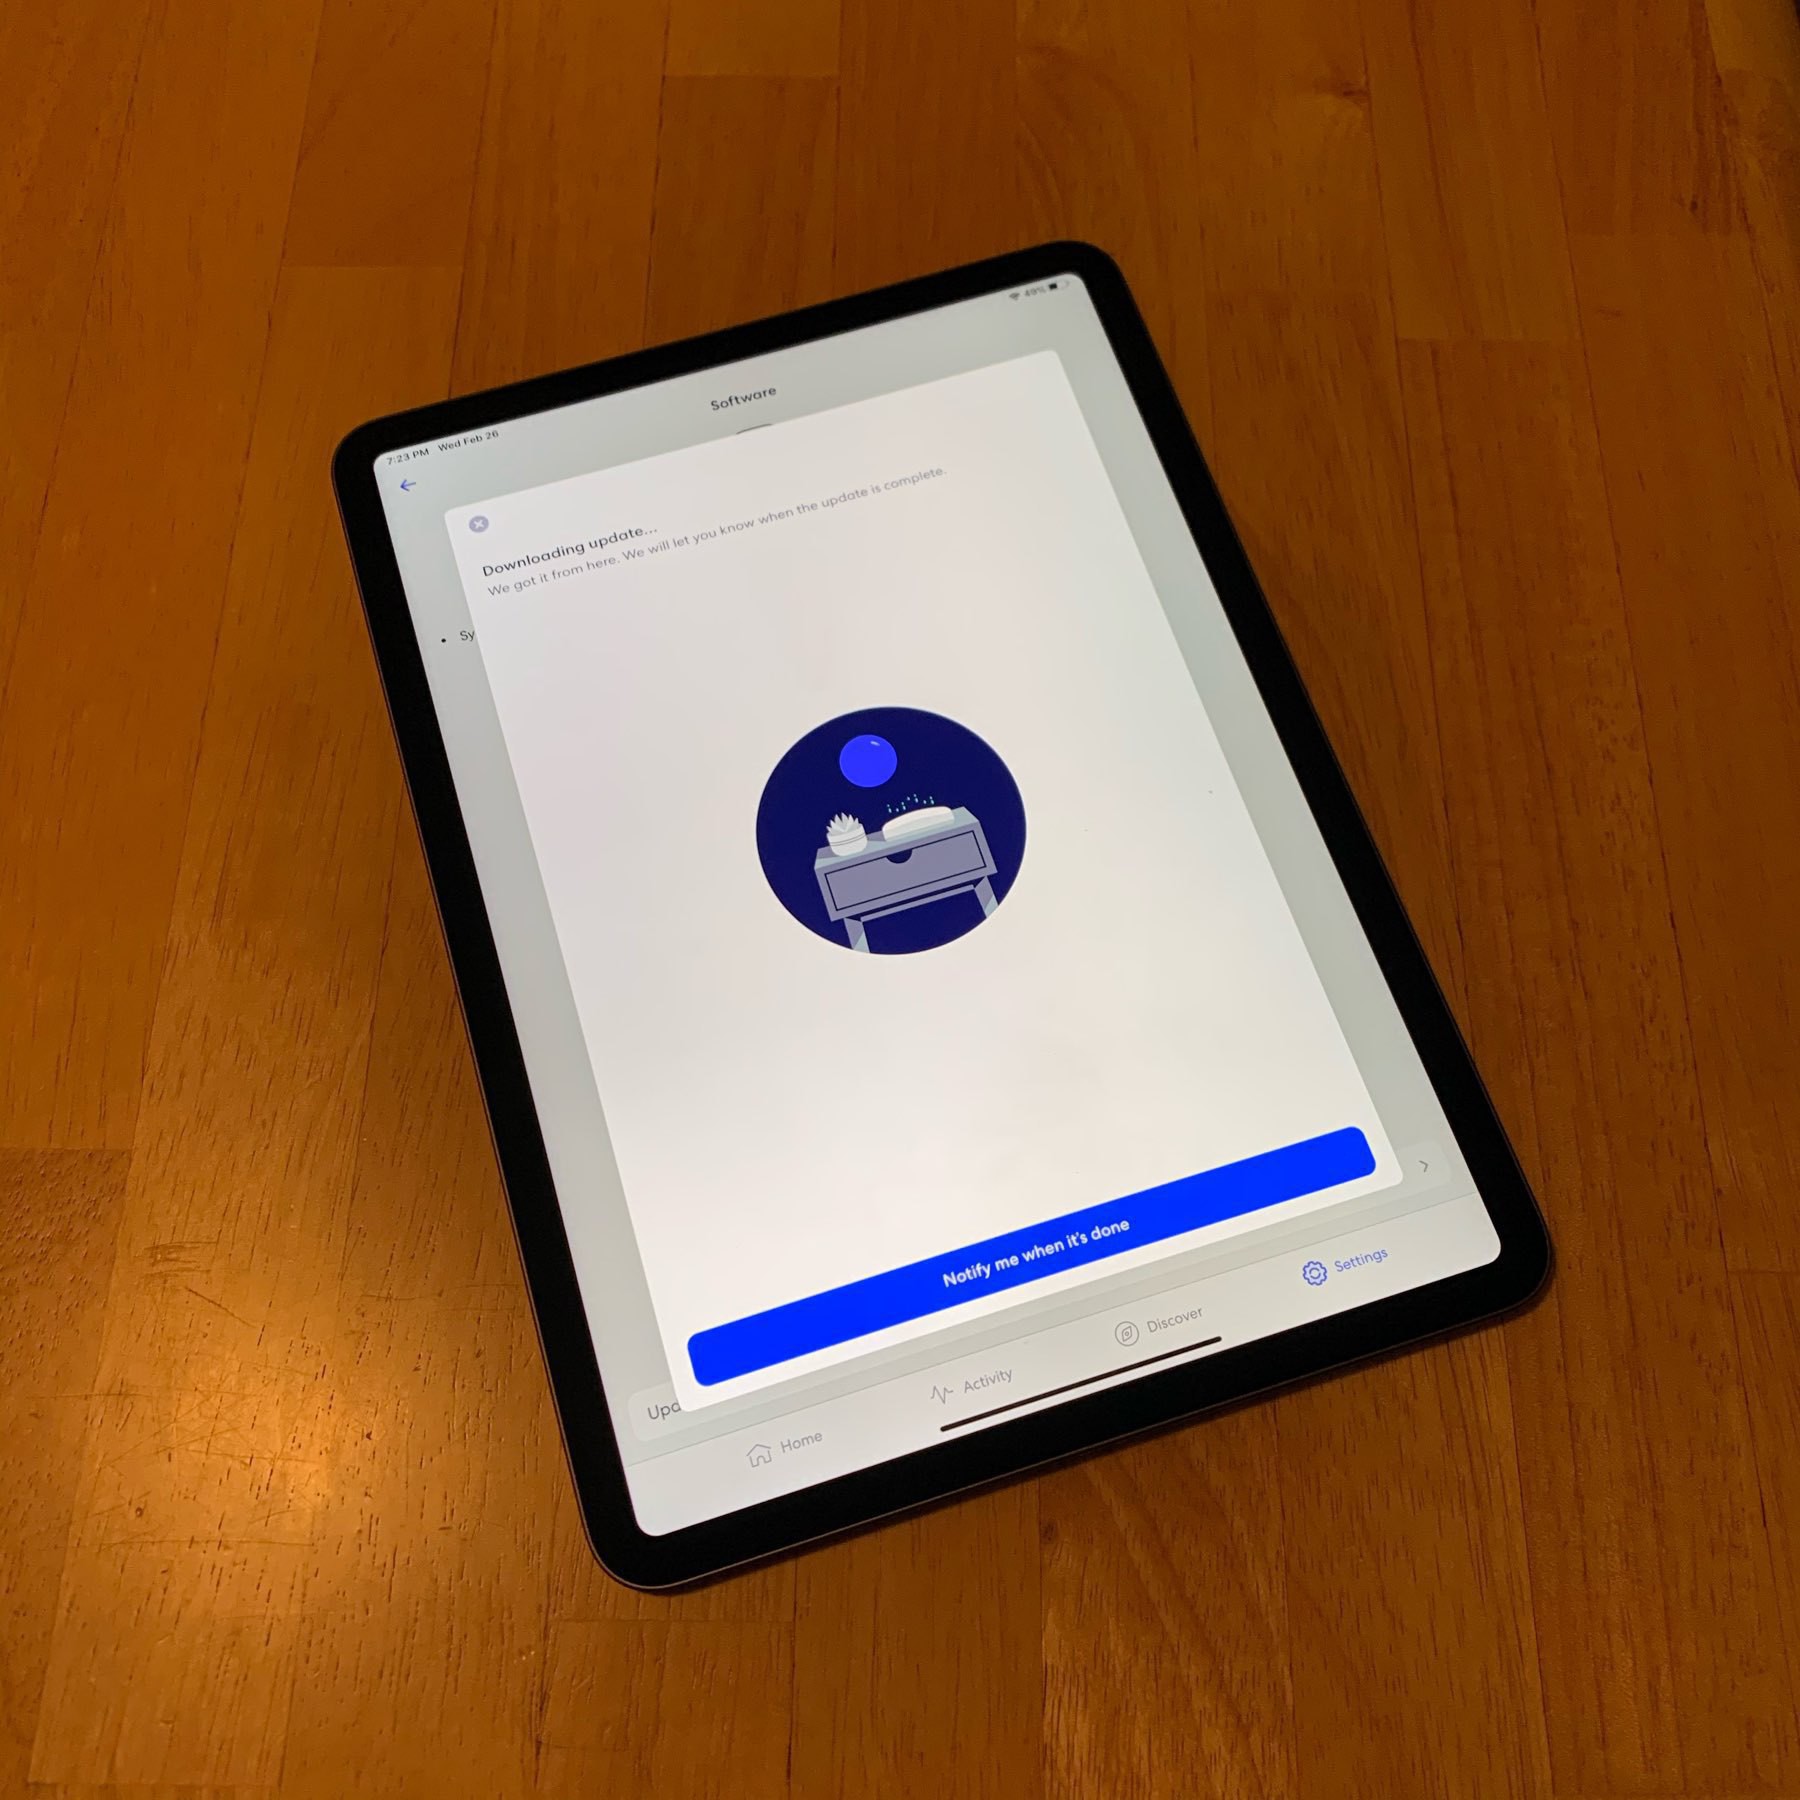 iPad updating software